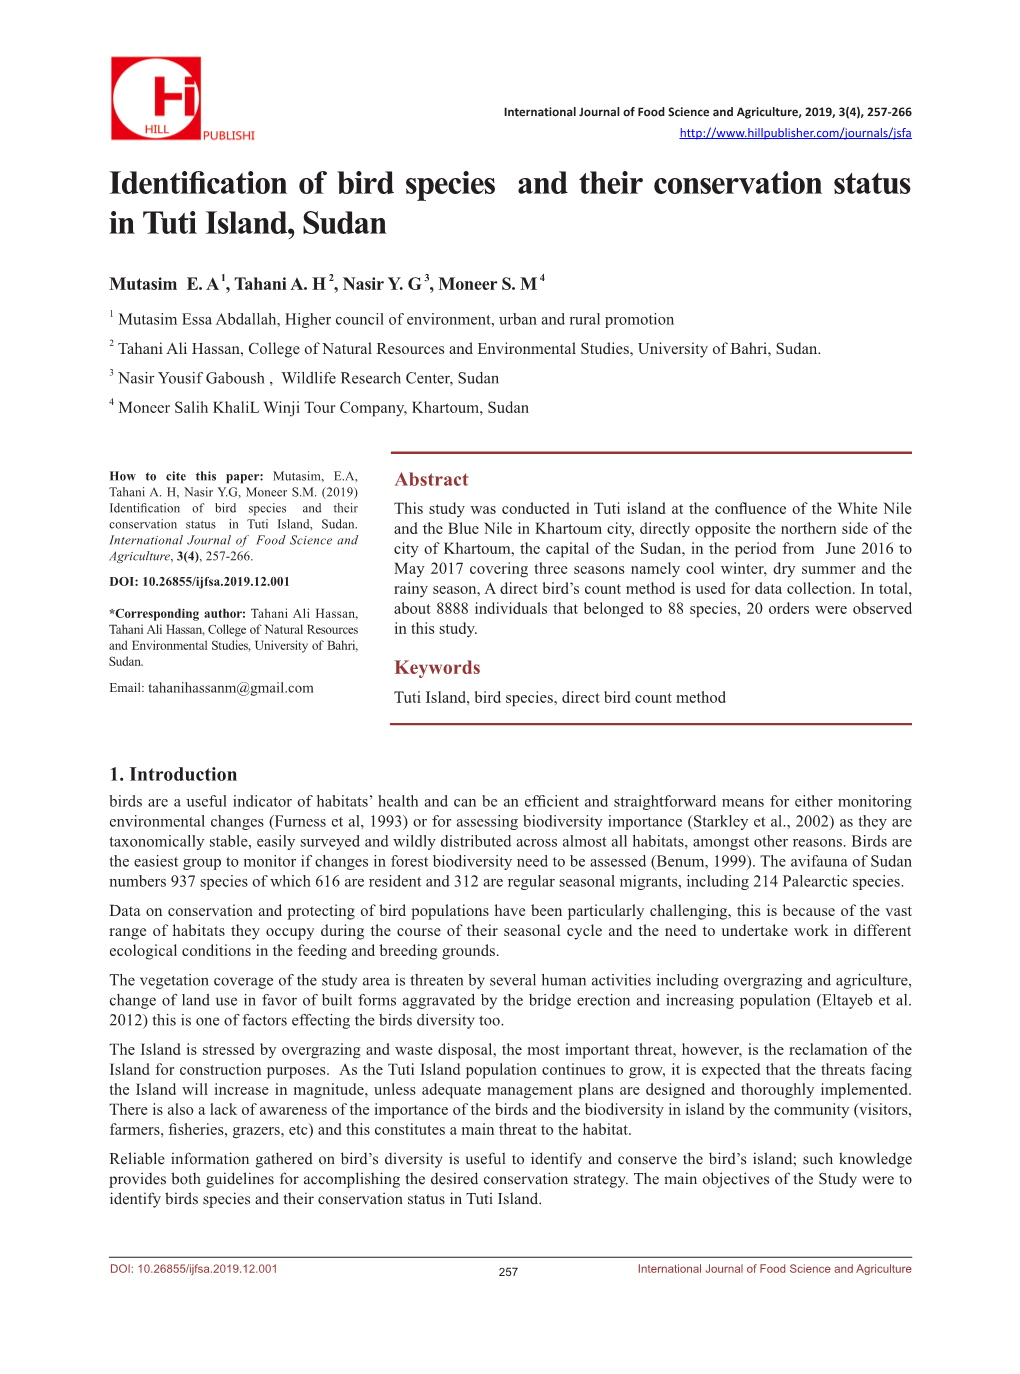 Identification of Bird Species and Their Conservation Status in Tuti Island, Sudan